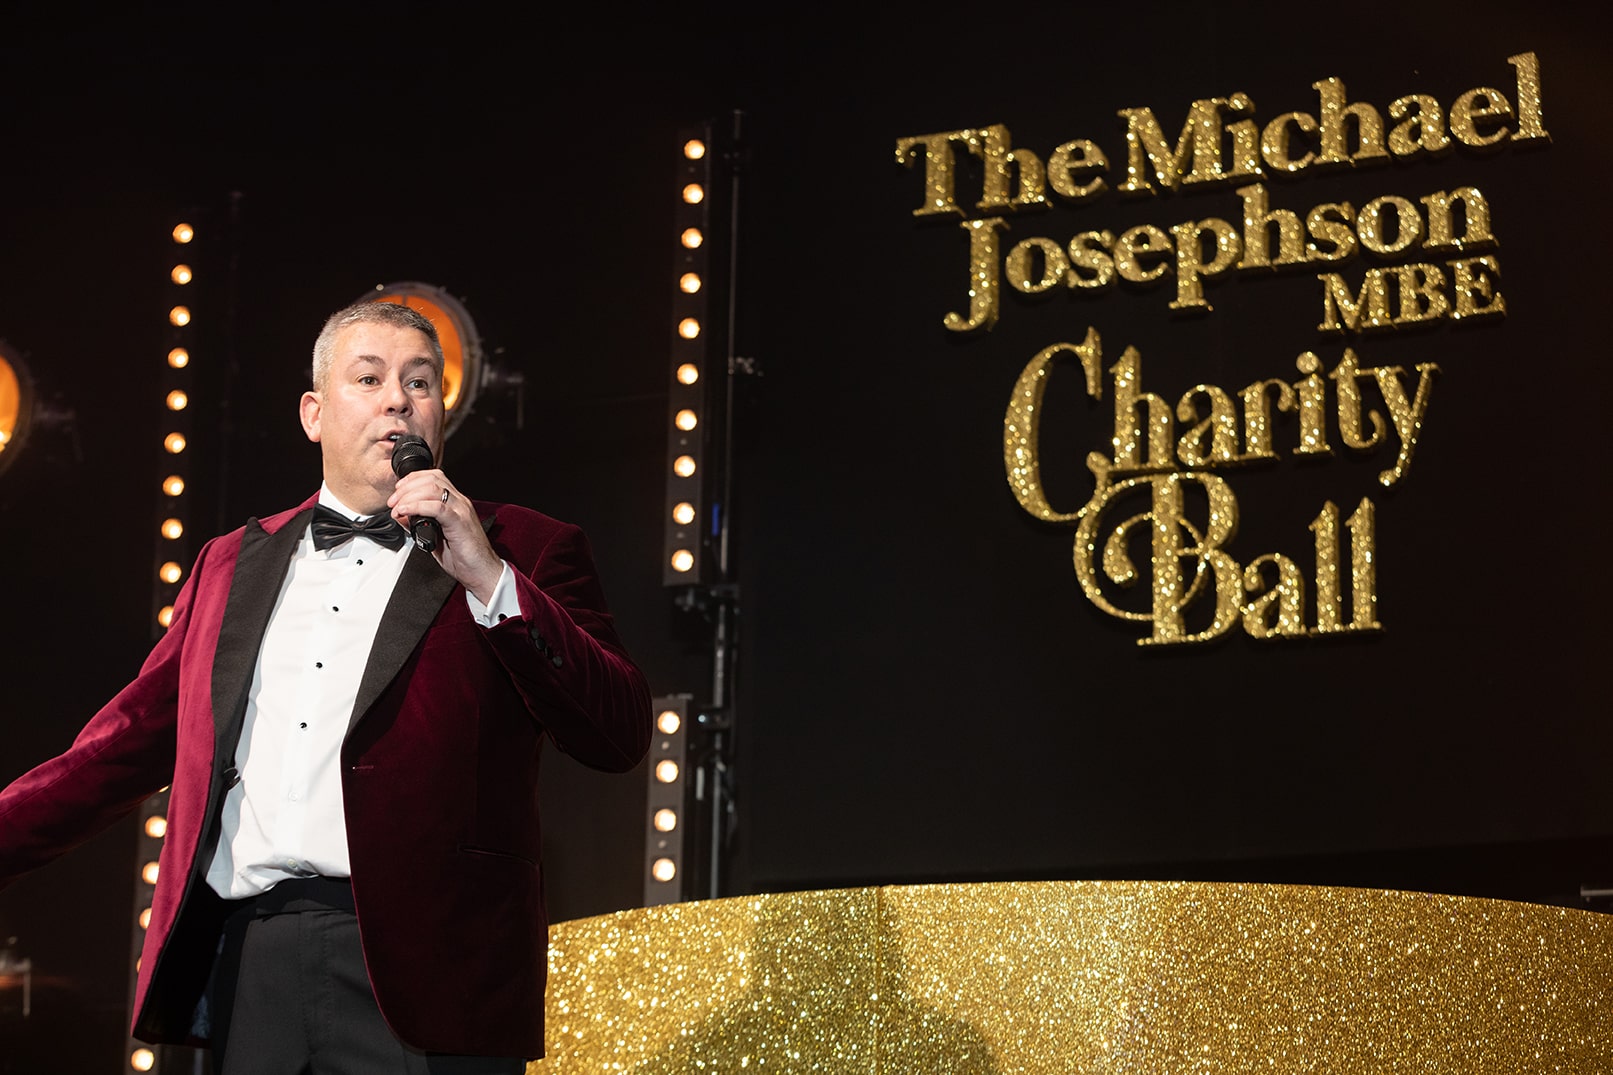 Michael Josephson MBE Charity Ball